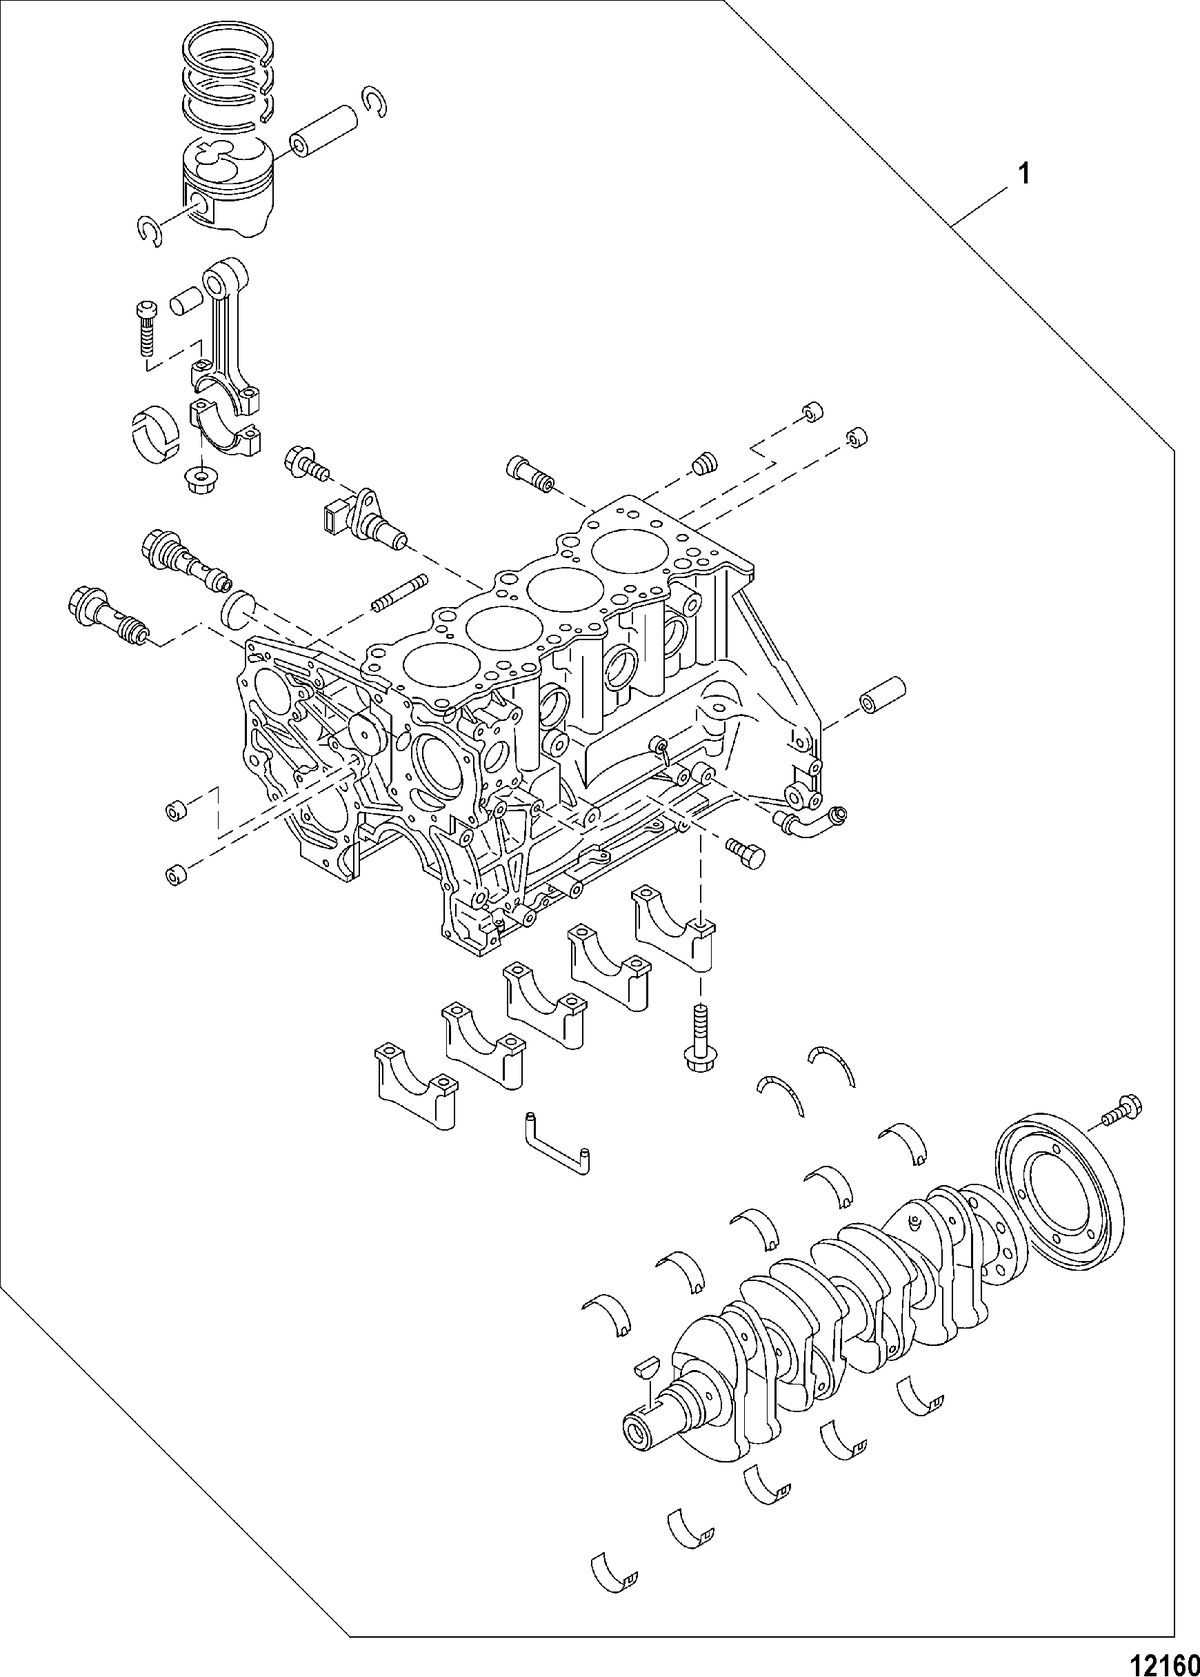 MERCRUISER CUMMINS/MERCRUSER DIESEL 1.7L-120 Service Kit - Partial Engine Assembly